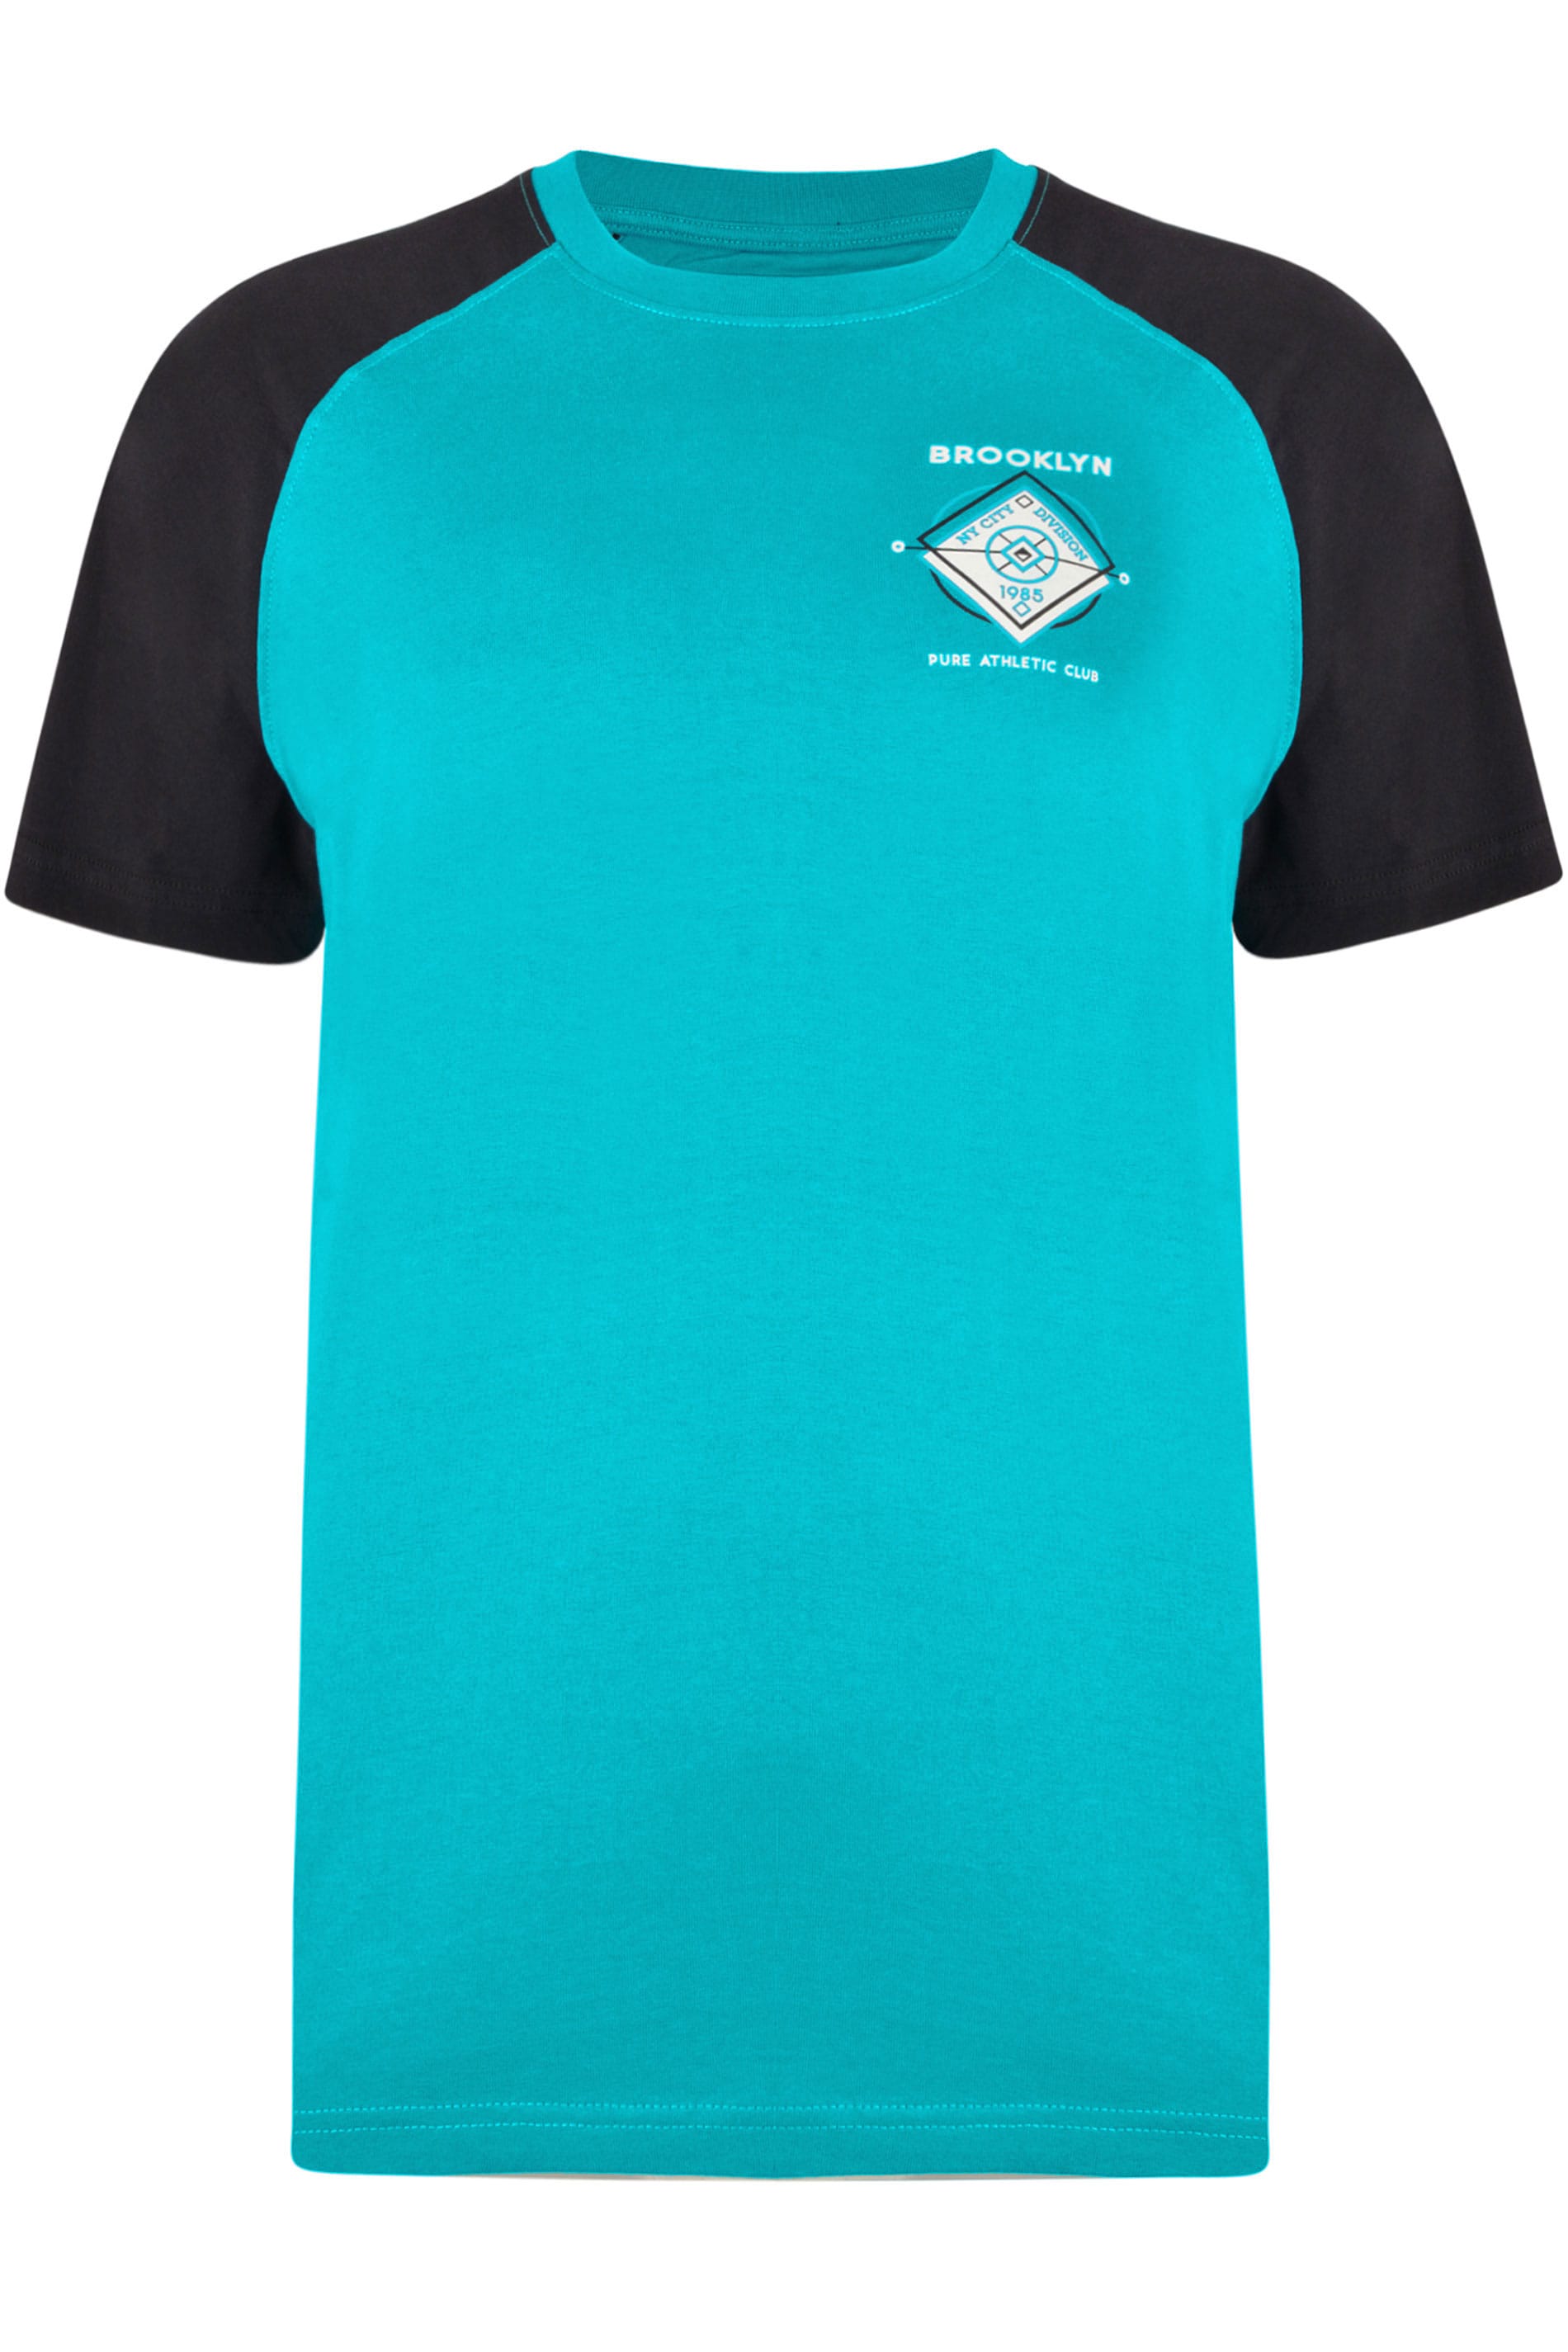 KAM Blue Raglan Graphic T-Shirt_973f.jpg